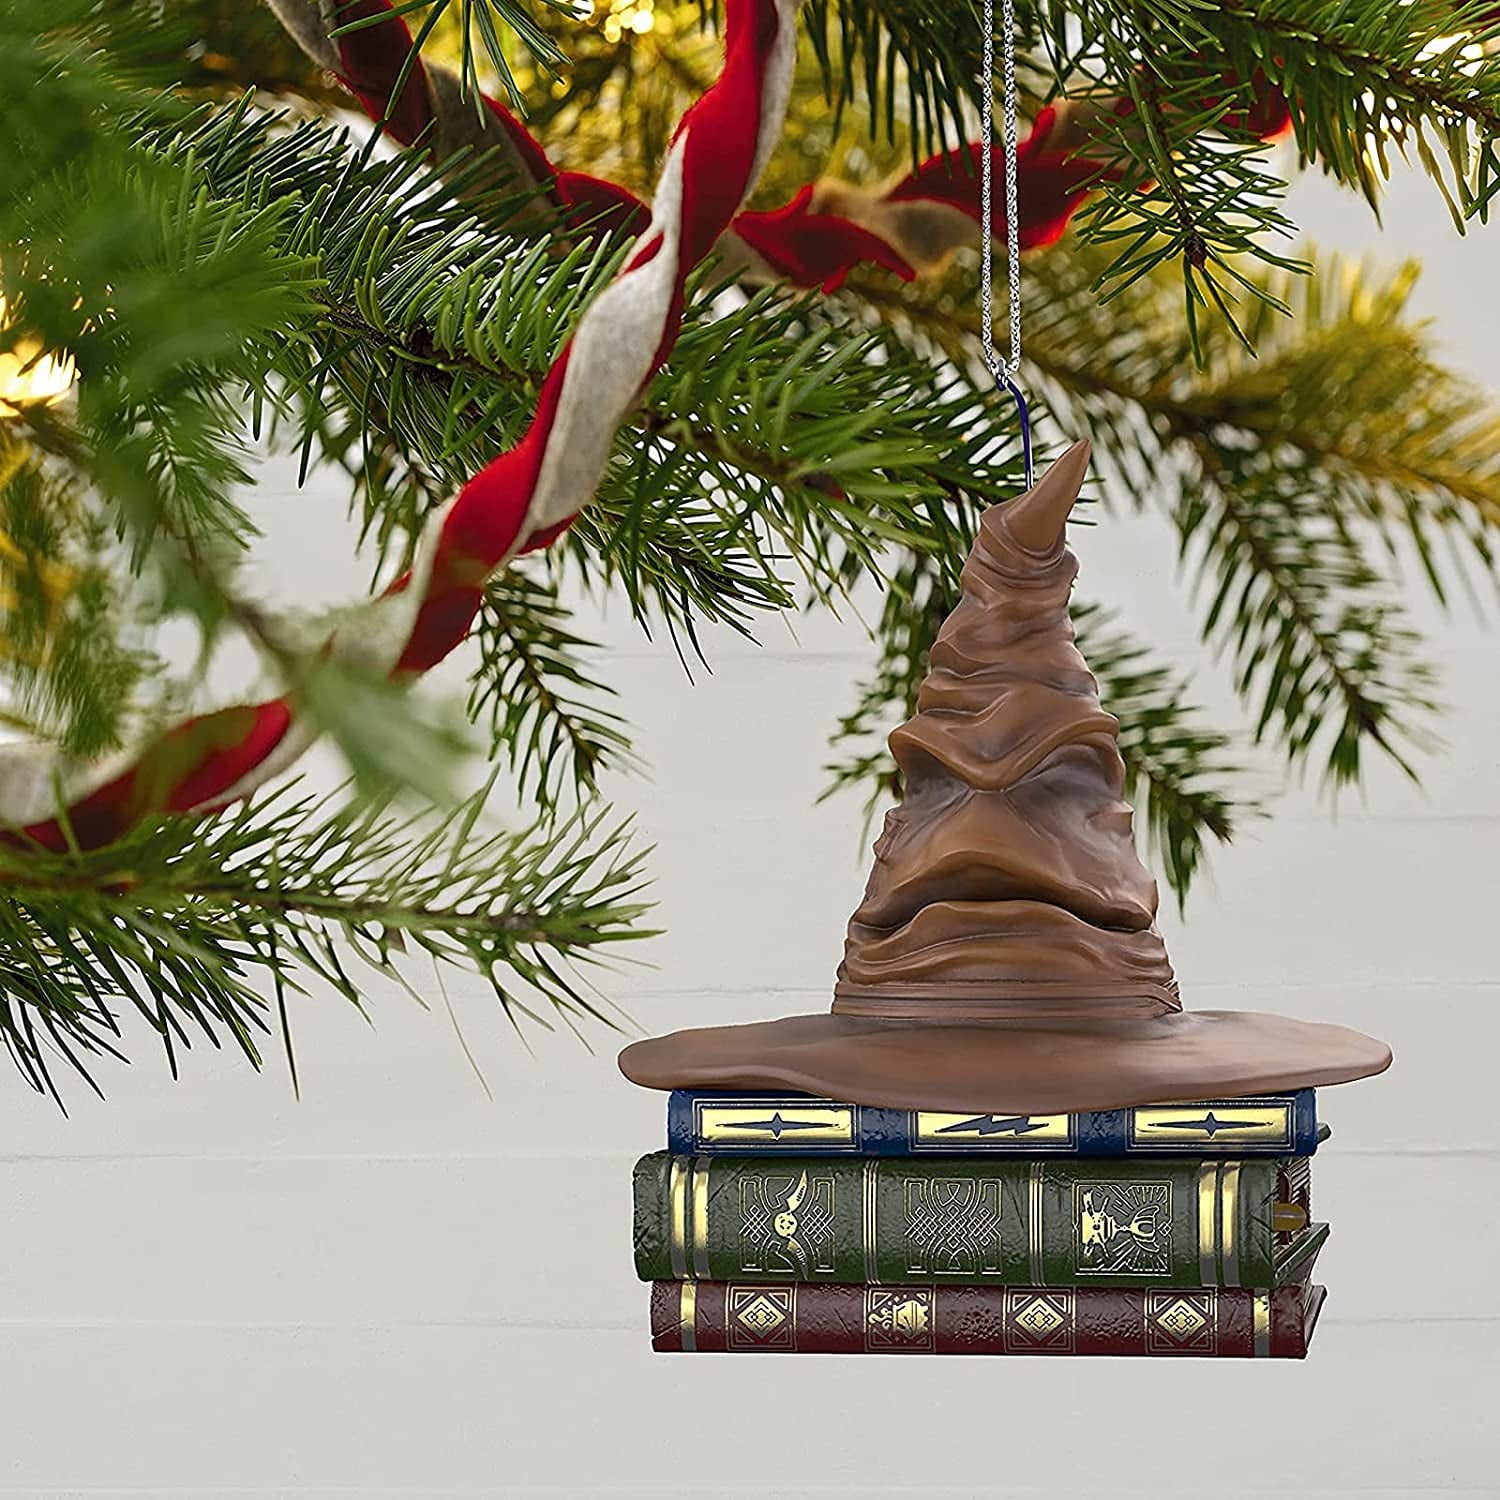 Gryffindor Harrys Potters Sorting Hat Hallmarks Keepsake Christmas Decoration 2021 Home Decor Kawaii Room Decor Magic hat Ornament